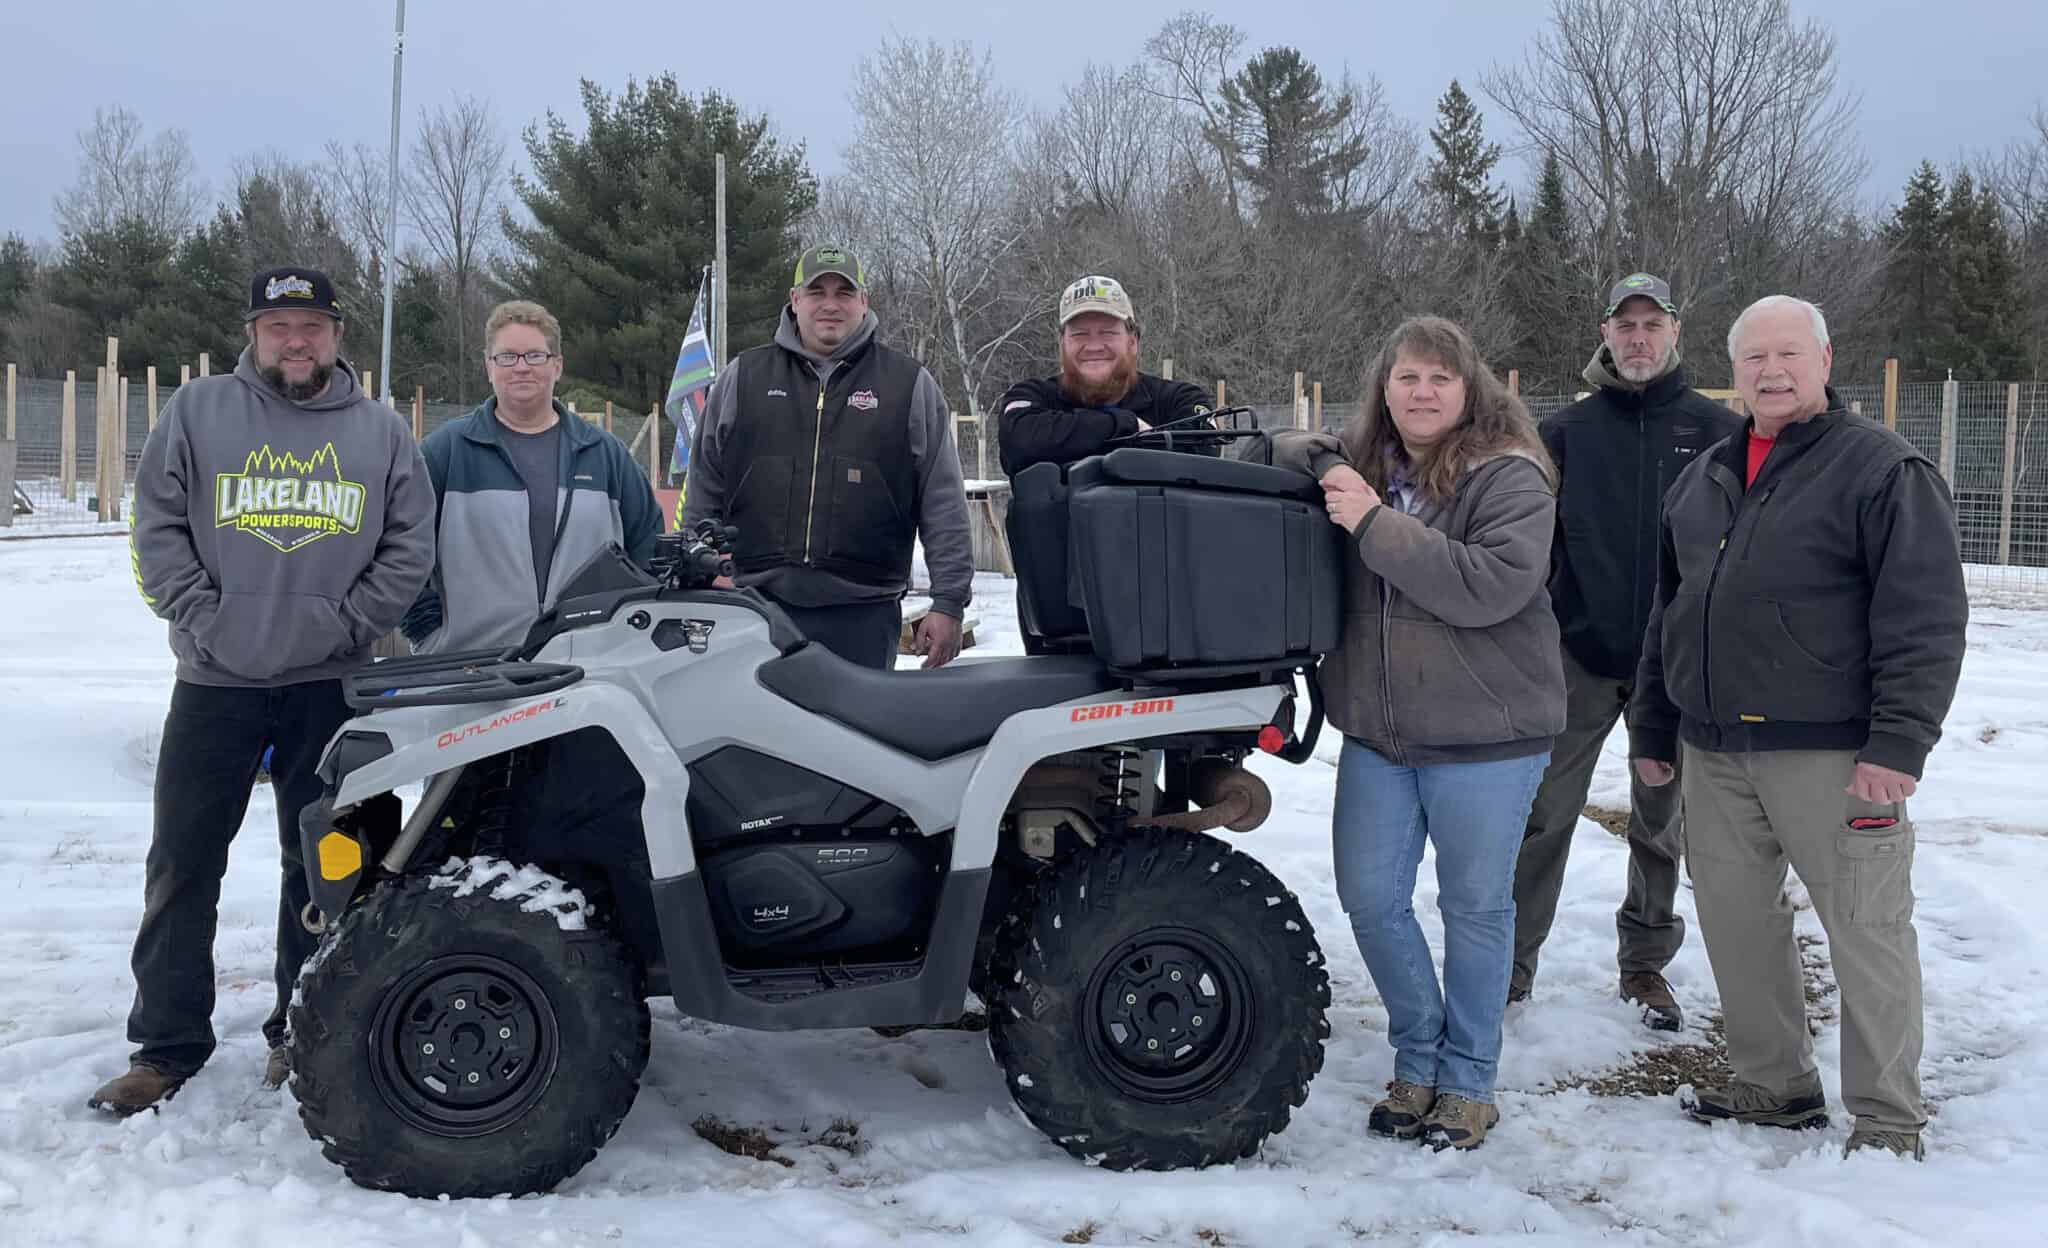 Gleason wolfdog sanctuary gifted new ATV